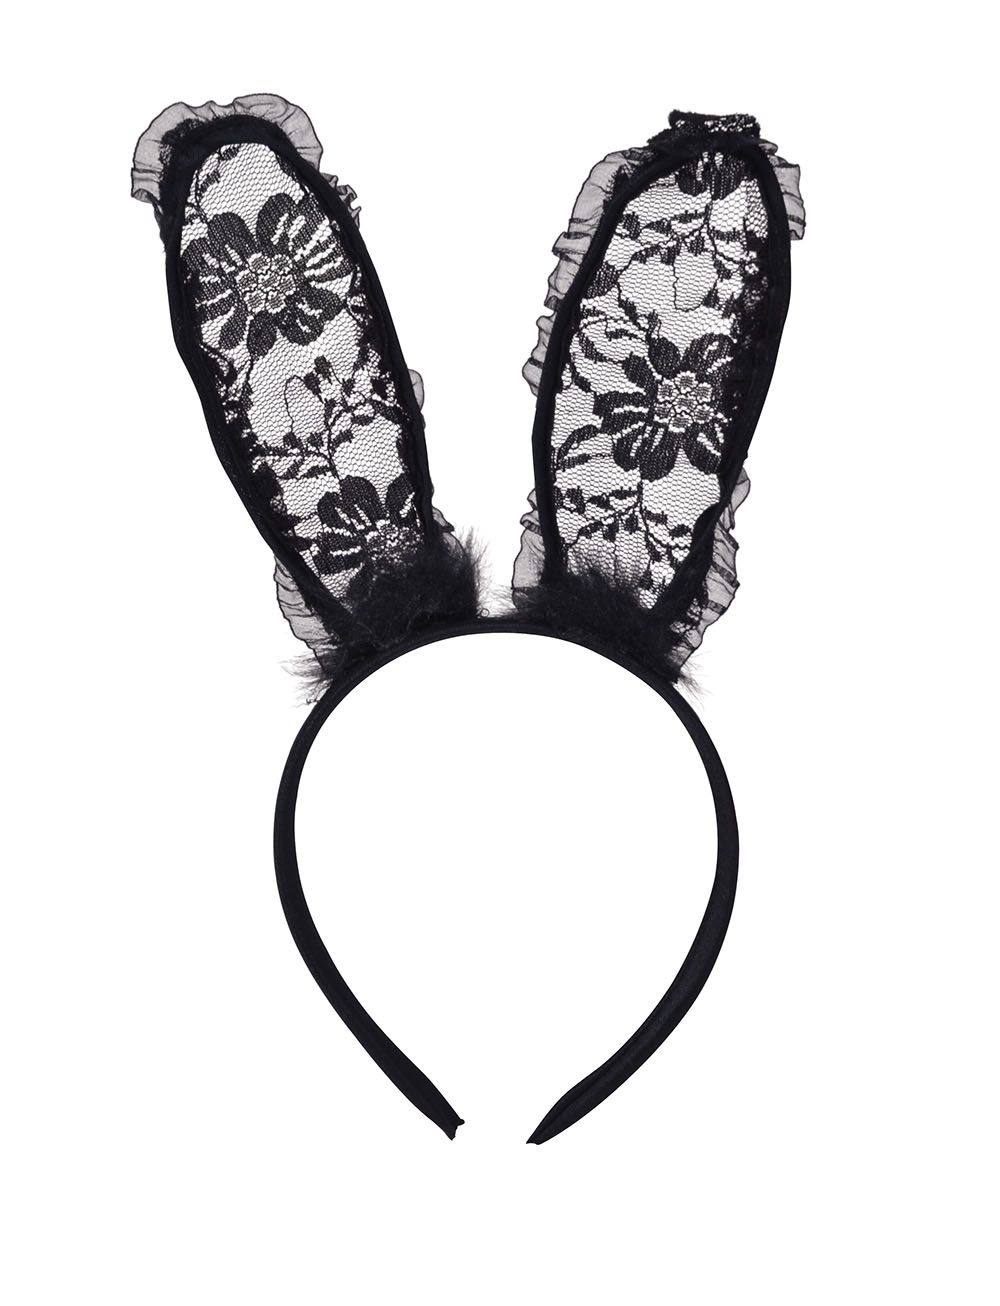 Bunny Ears, Black Lace